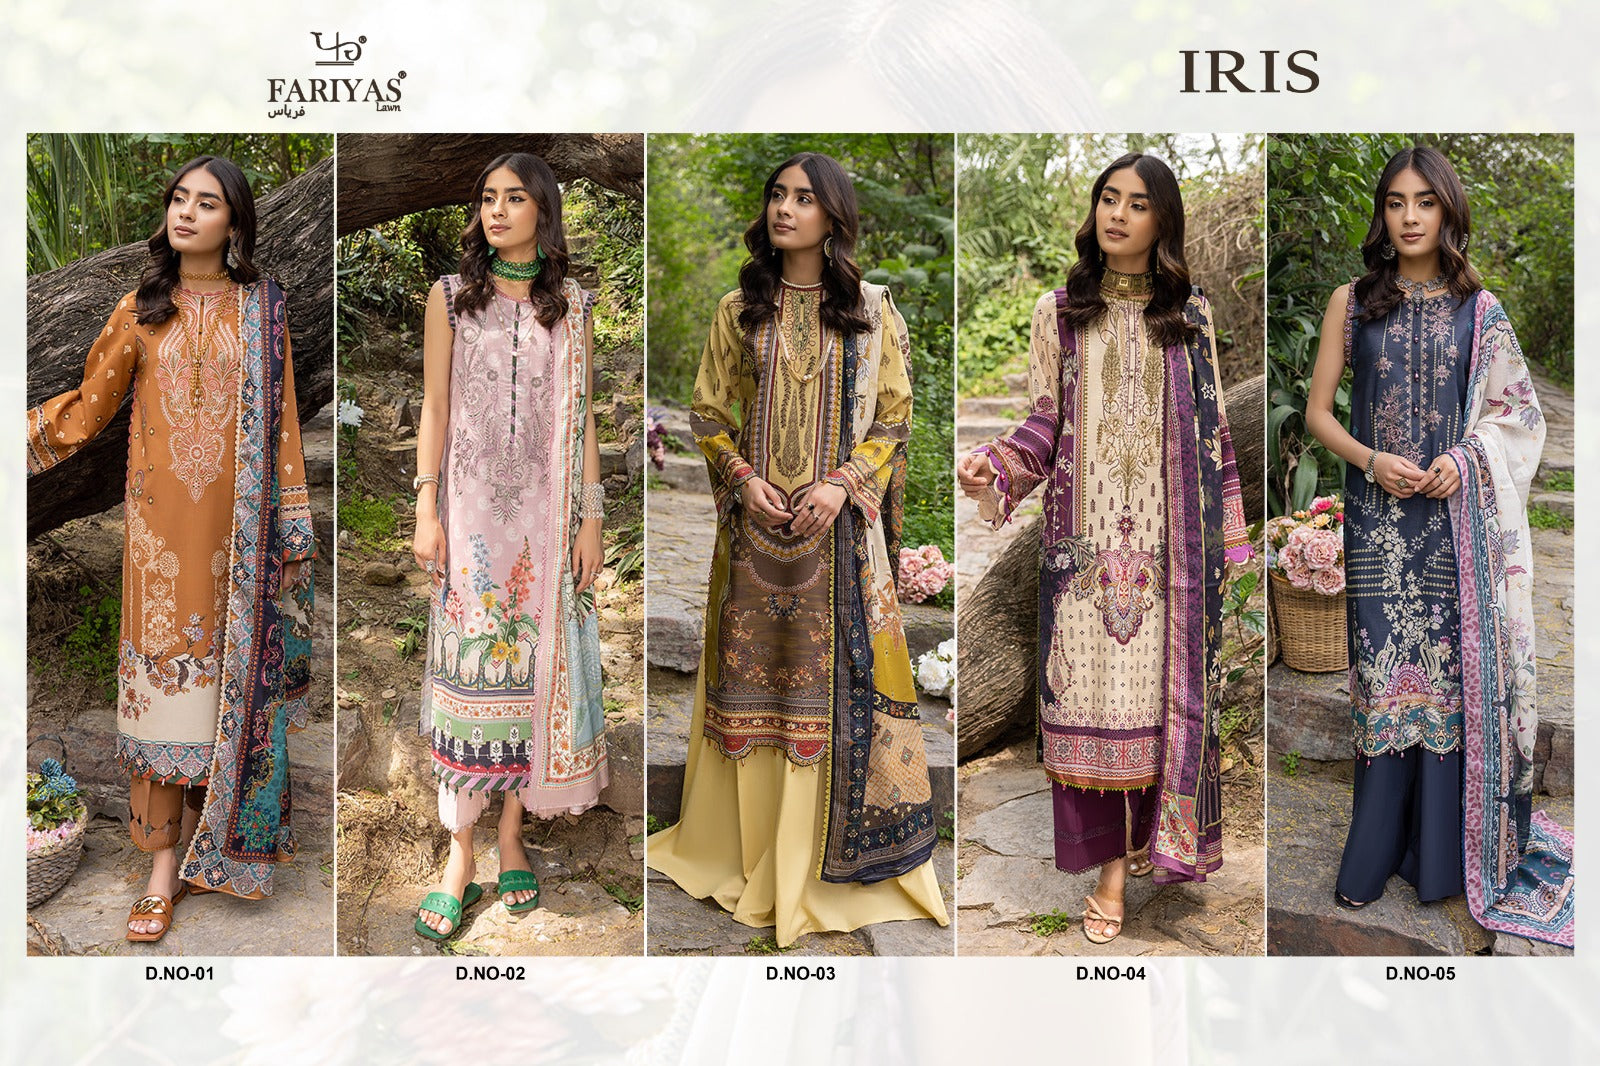 Fariyas iris Cotton With Embroidery Work Pakistani Wholesale Suits - jilaniwholesalesuit